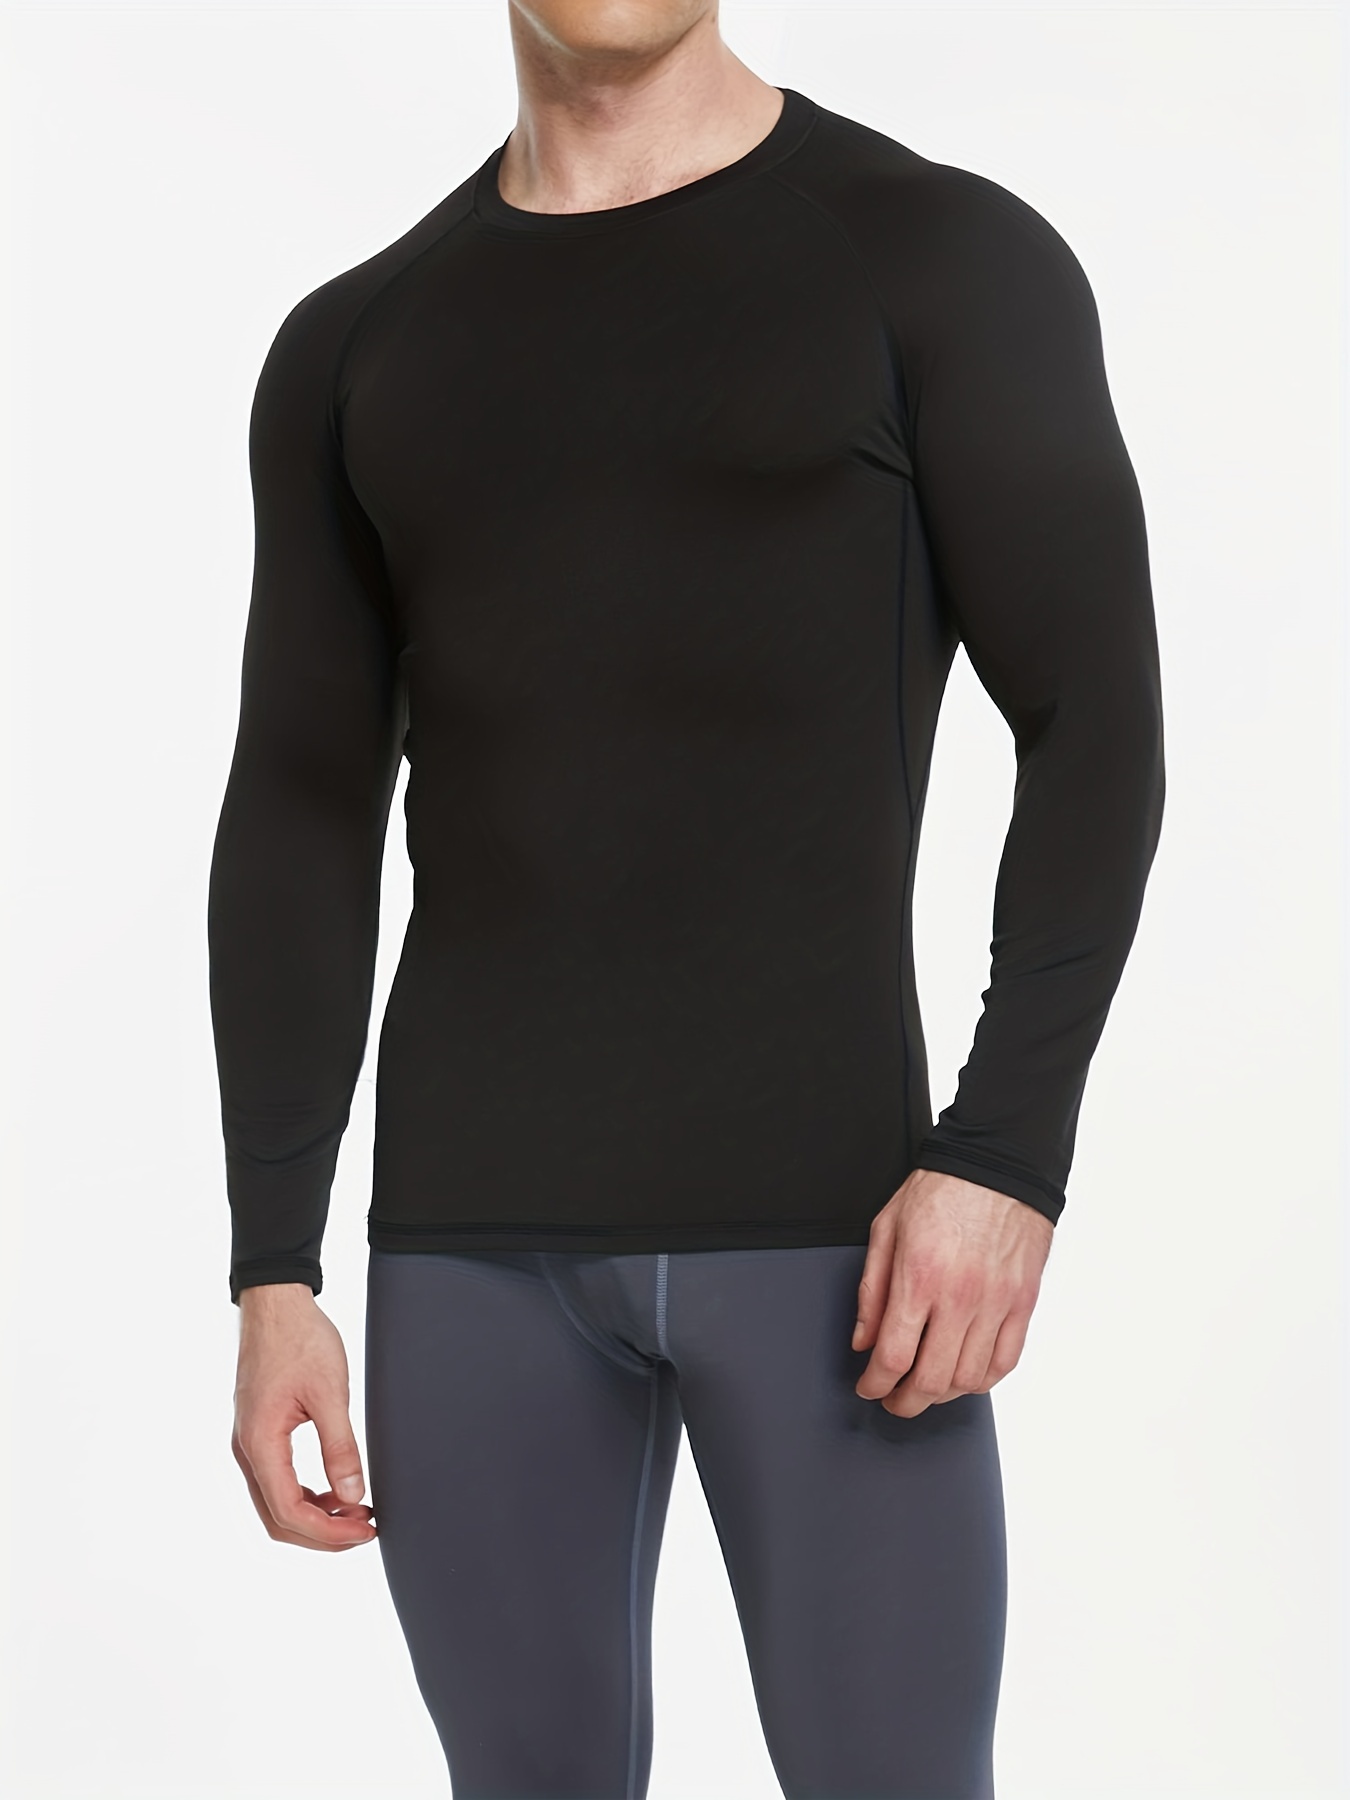 WUAI Mens Mock Turtleneck Compression Shirts Long Sleeve Big and Tall  Cooling Workout Gym Tops Undershirt Base Layer Shirt(Black,Medium) at   Men's Clothing store